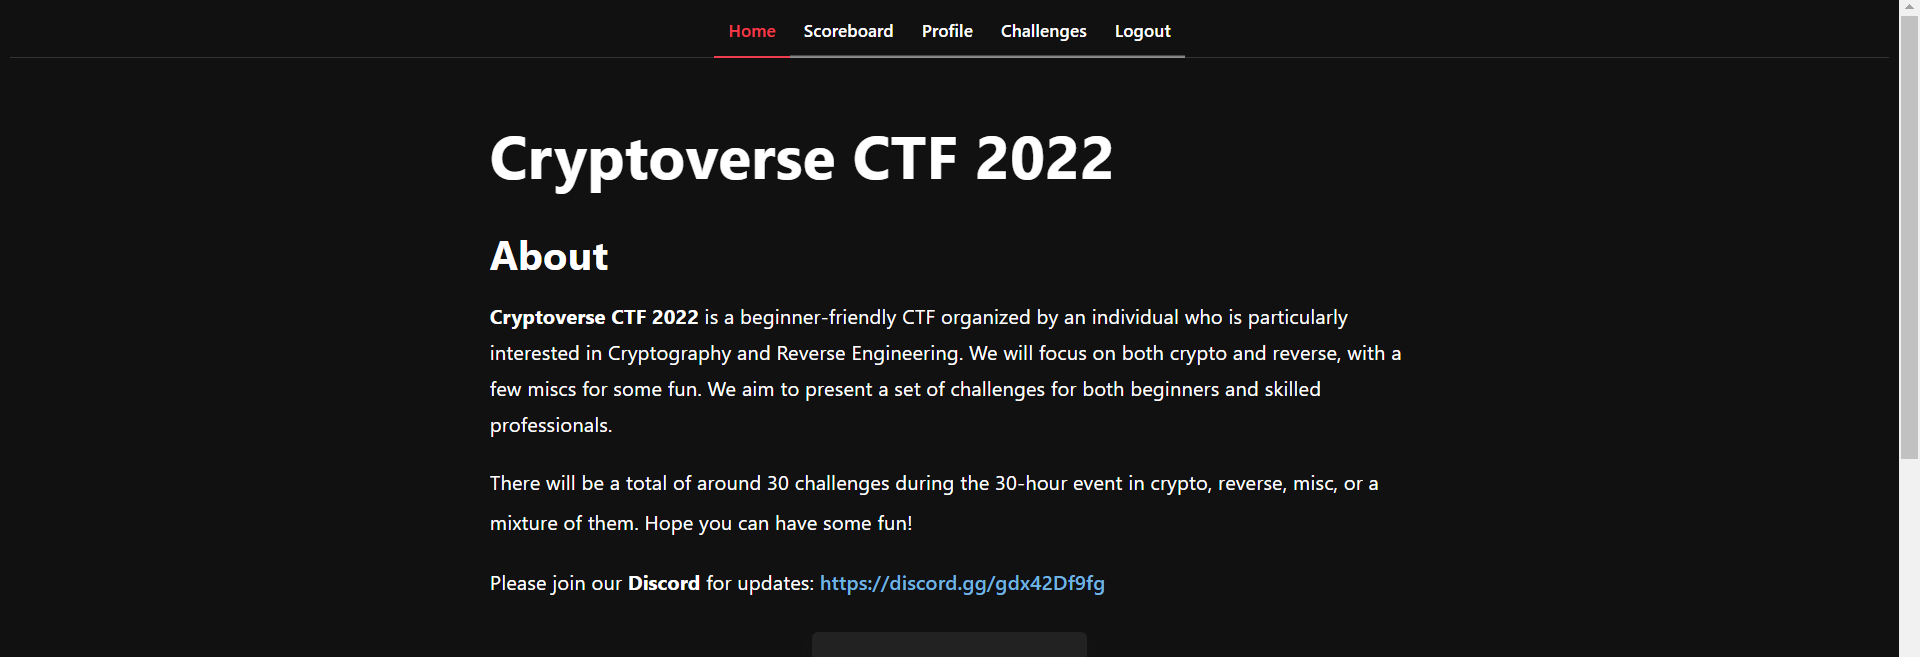 Cryptoverse CTF 2022